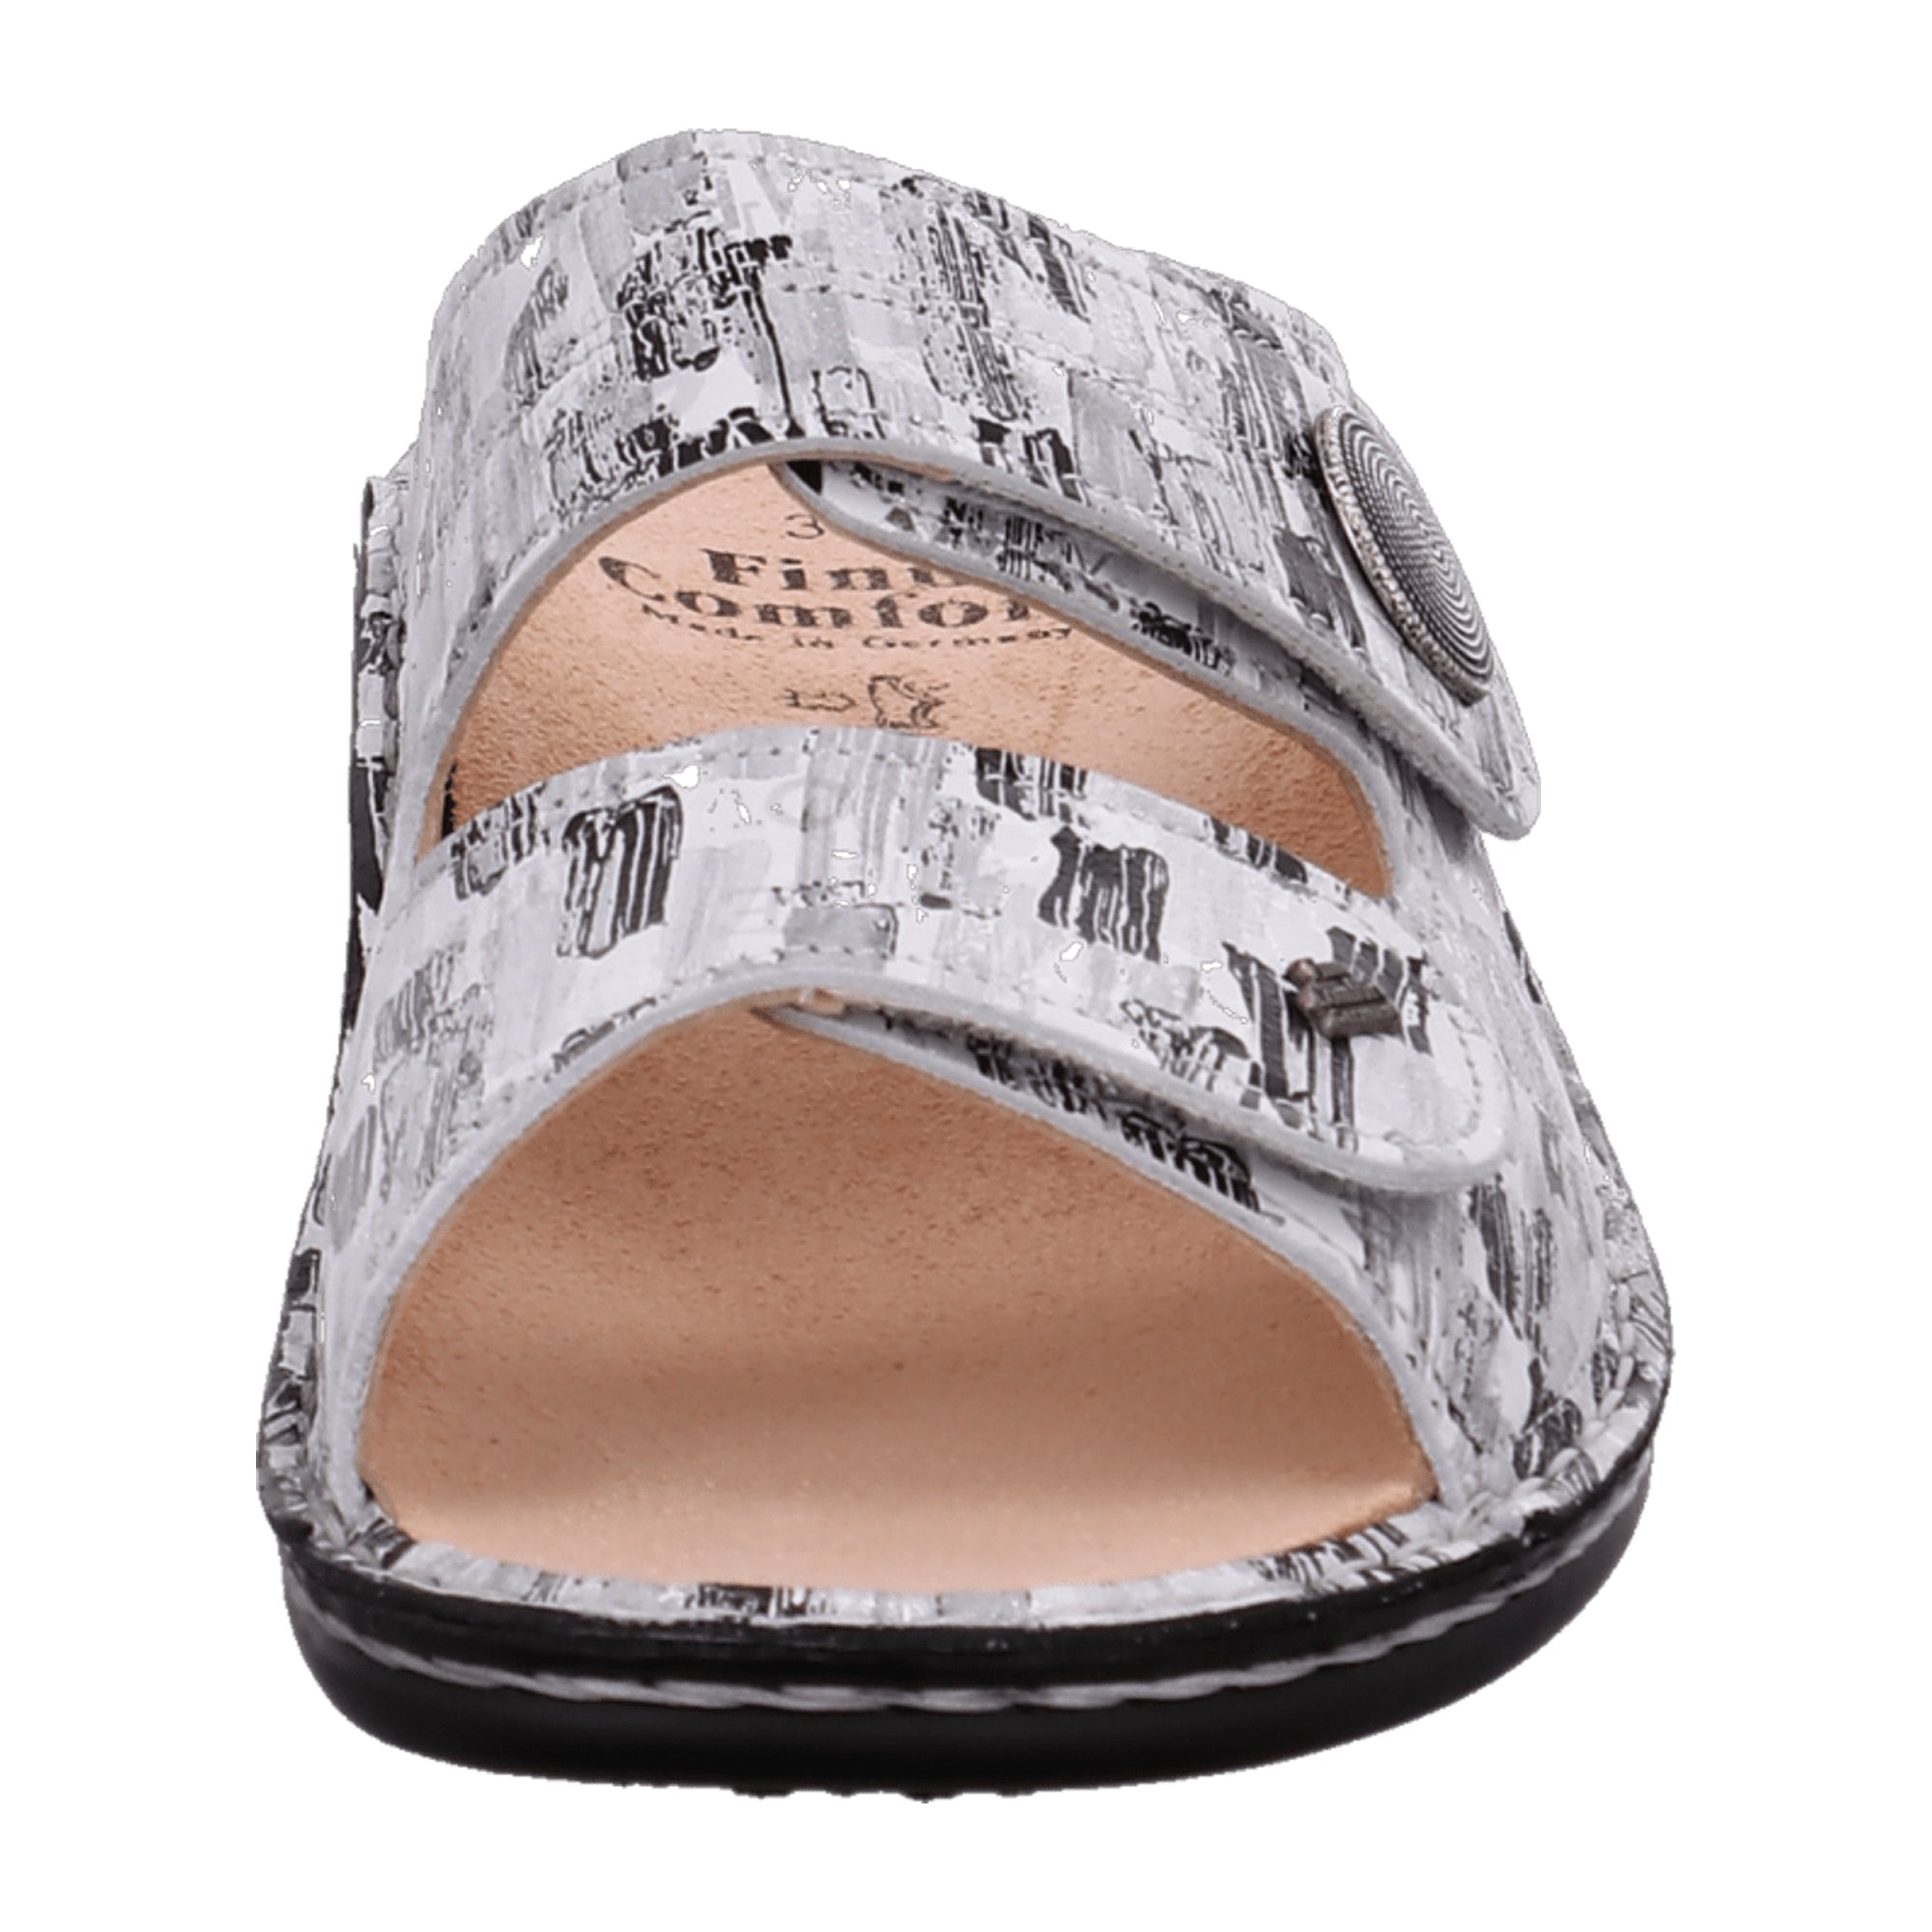 Finn Comfort Sansibar Women's Comfort Sandals, Stylish Gray